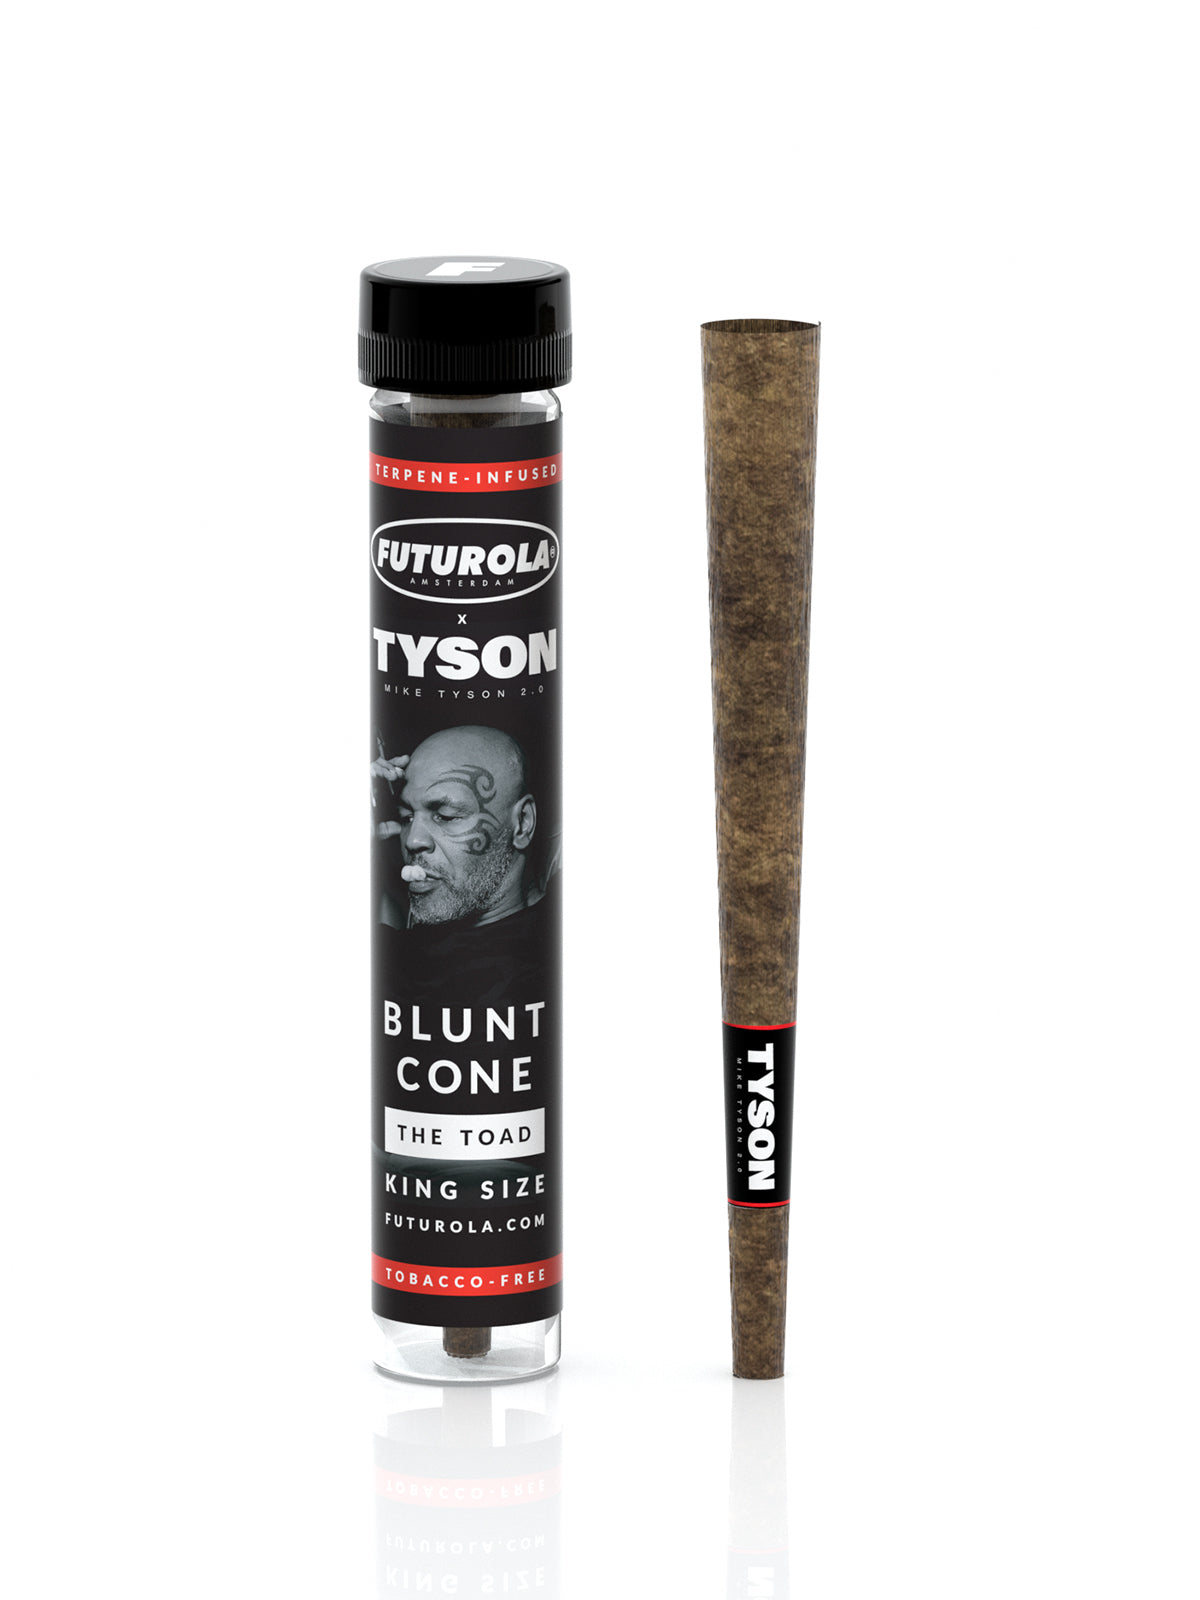 Mike Tyson 2.0 The Toad Cone 6-Pk Futurola Smoke Drop 